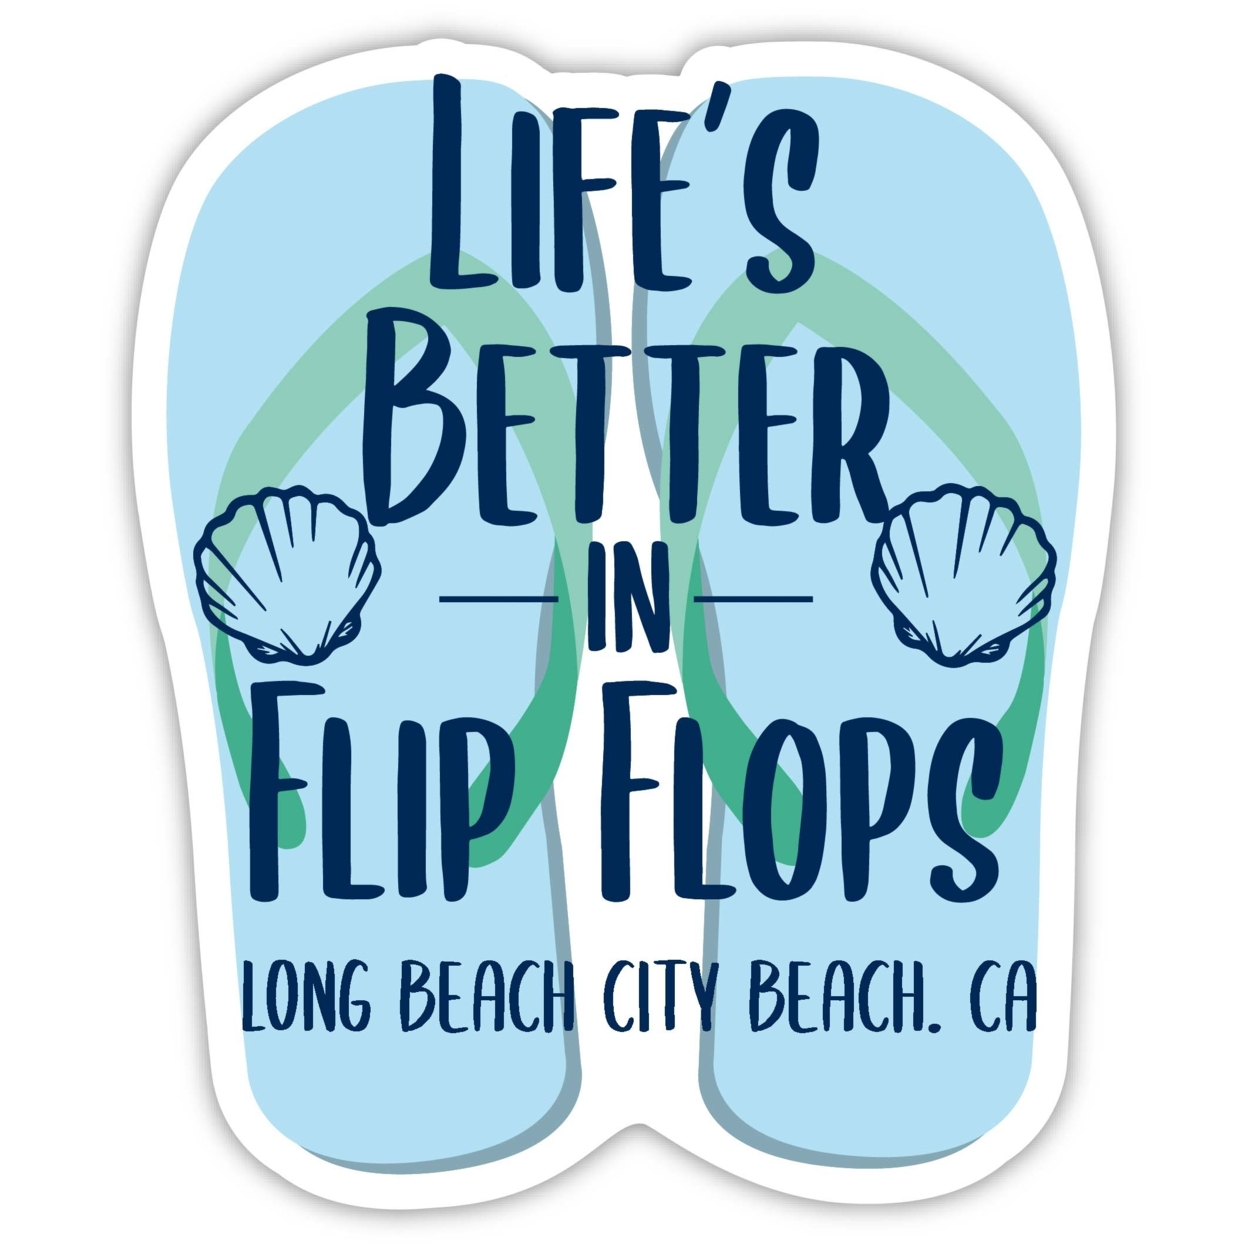 Long Beach City Beach California Souvenir 4 Inch Vinyl Decal Sticker Flip Flop Design